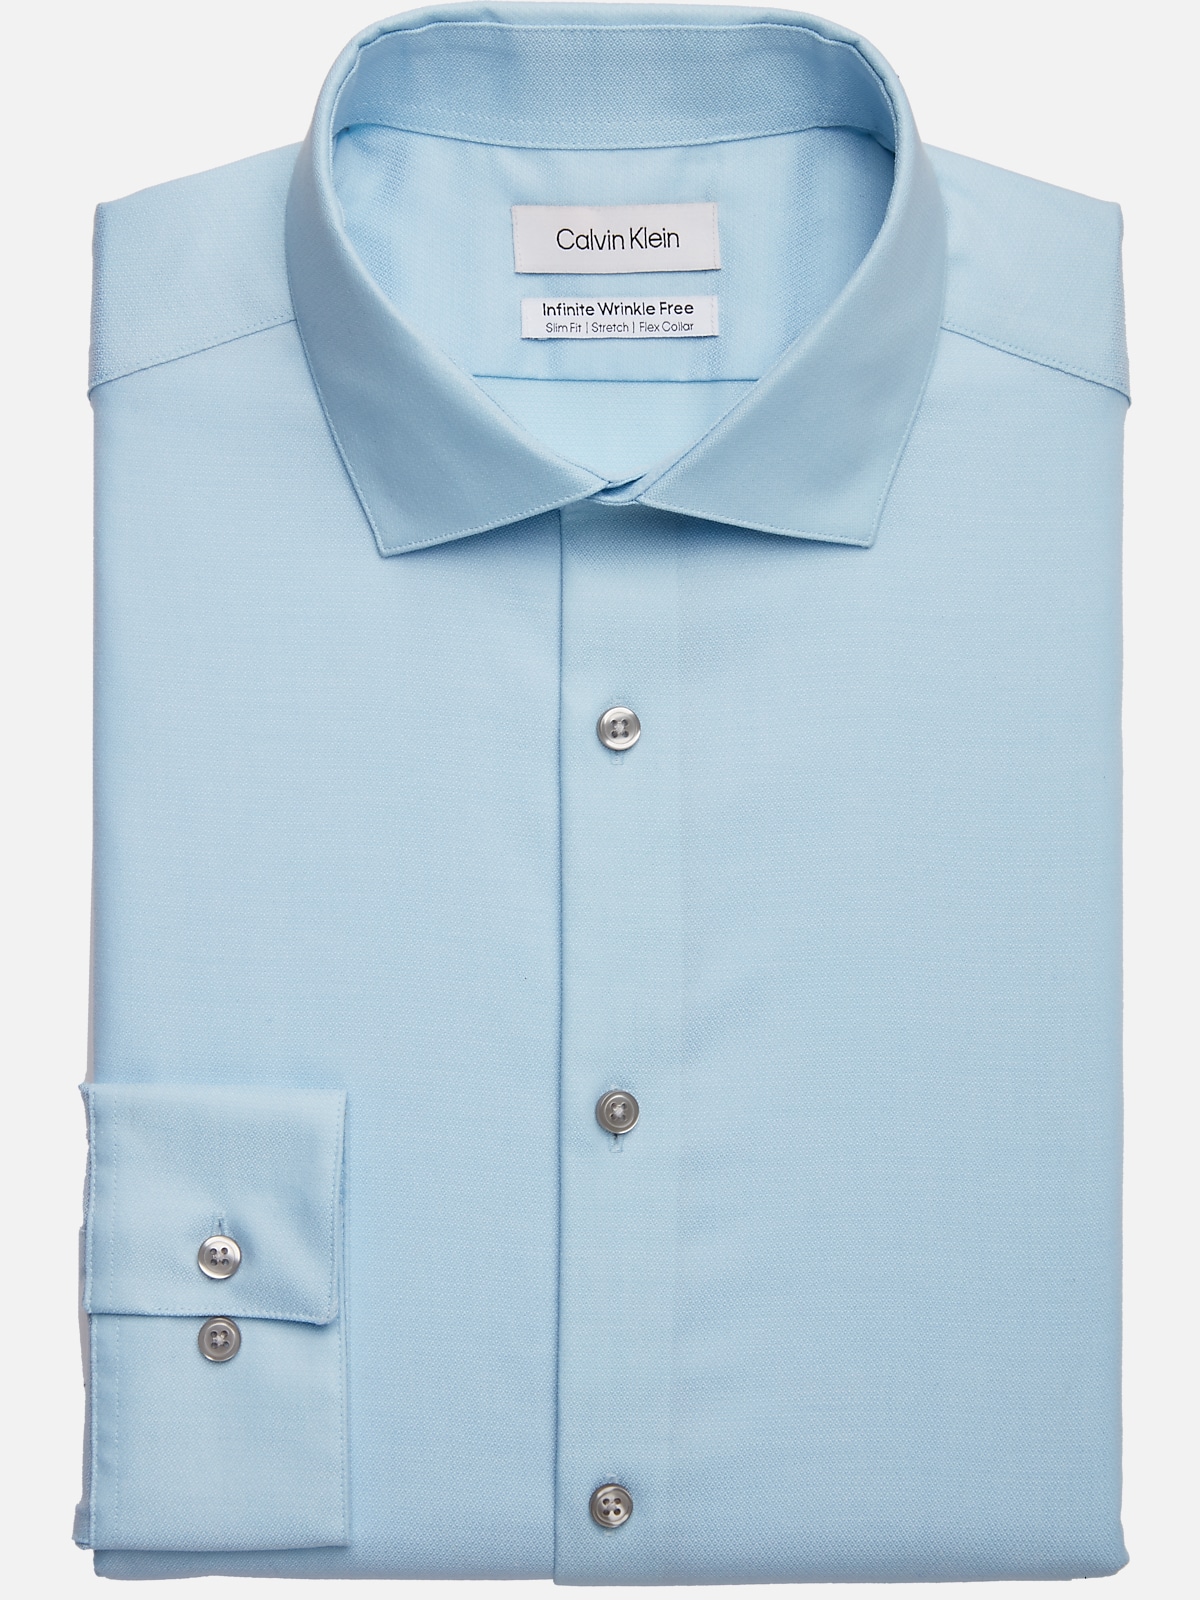 Calvin Klein Infinite Fit Clearance Shirt Slim | Wearhouse Stretch Wrinkle Collar Men\'s Dress Dress Shirts| Free